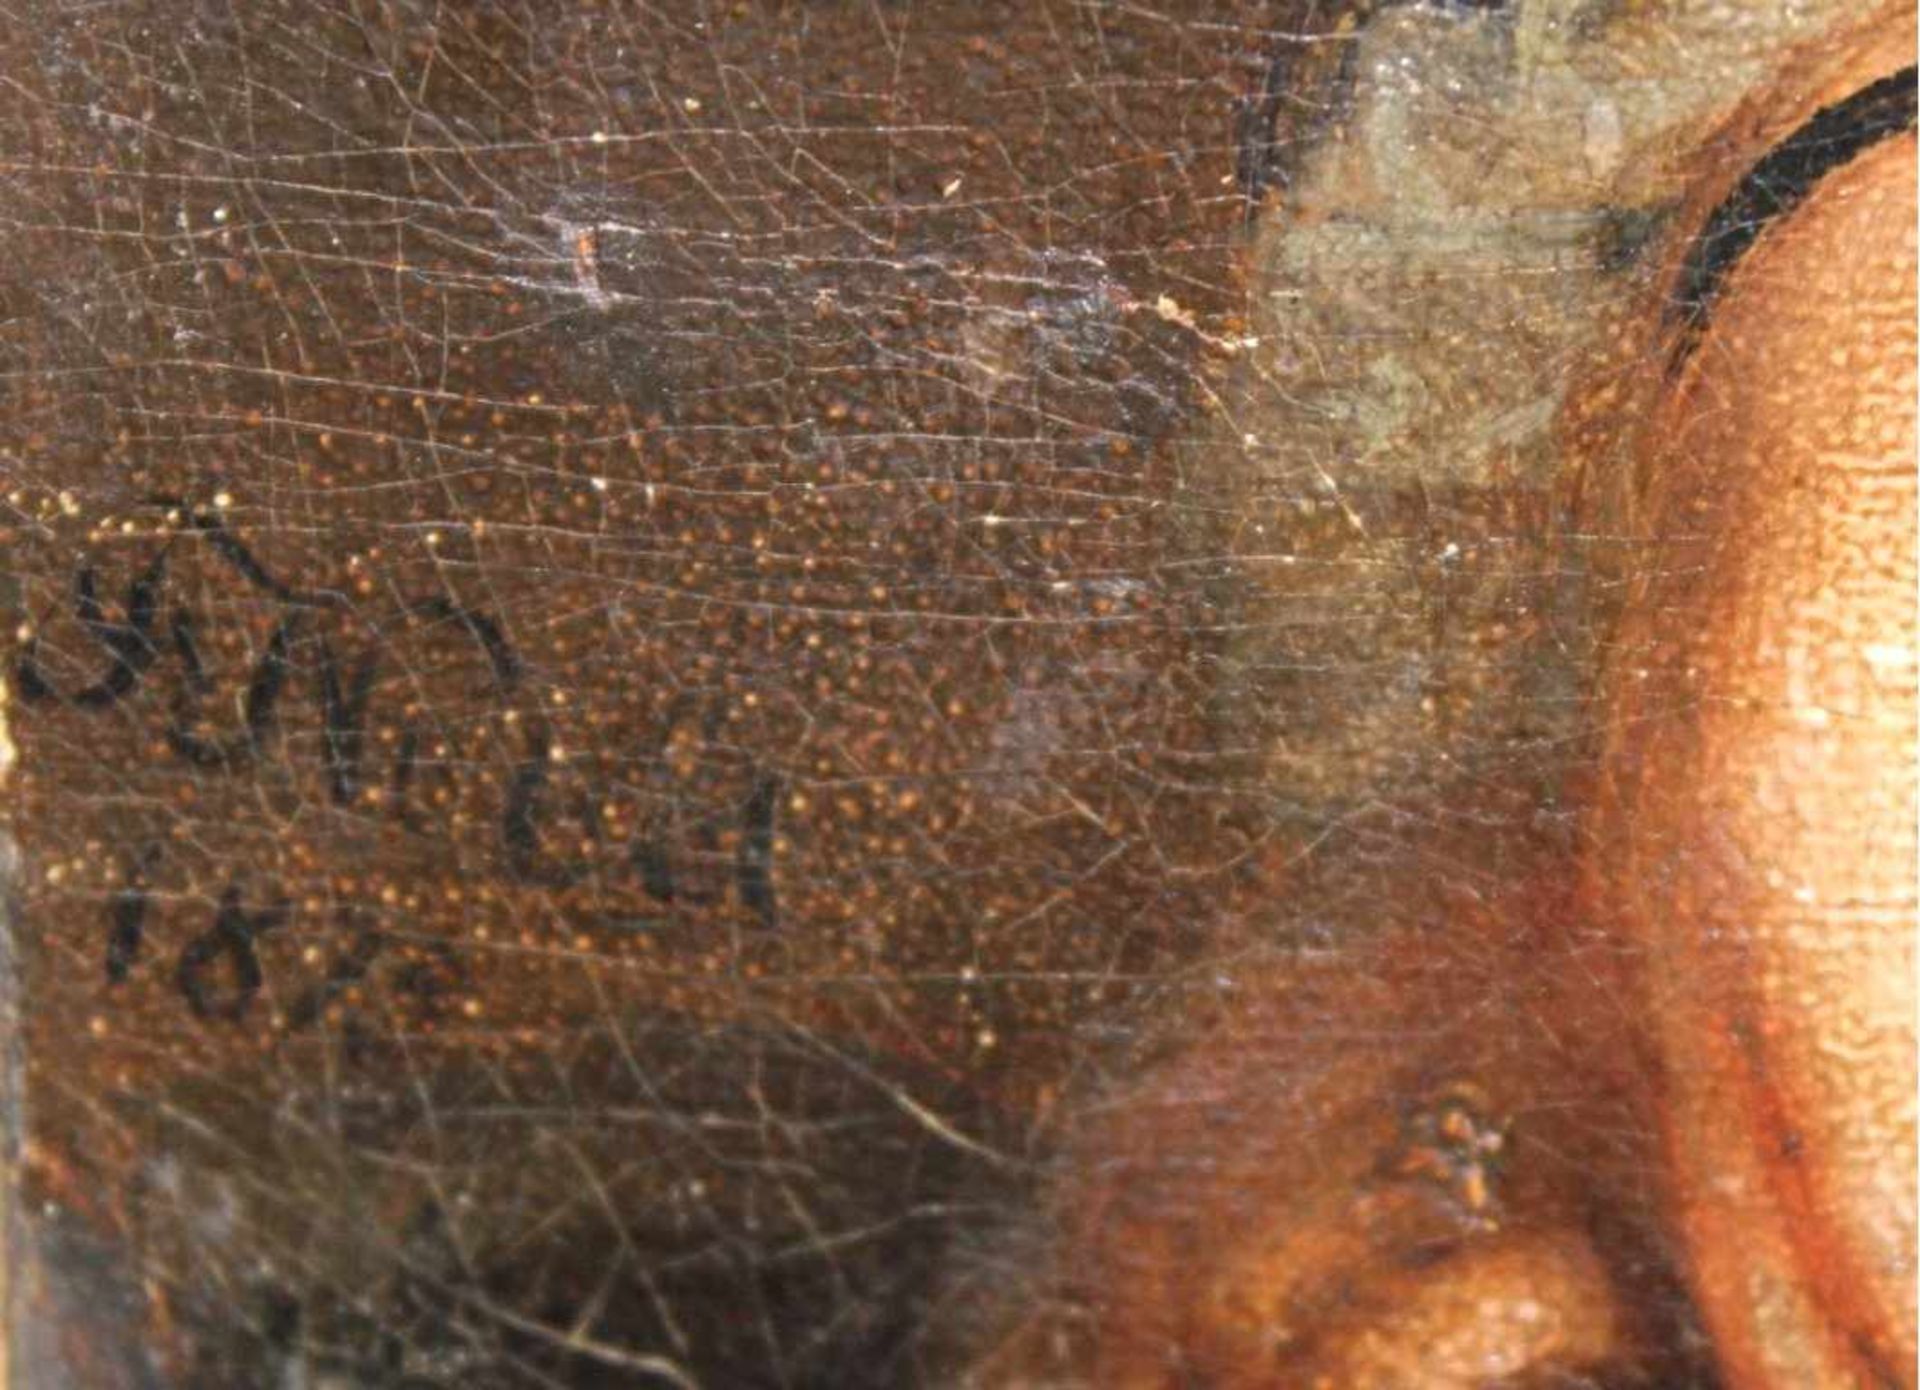 DamenportraitÖl auf Faserplatte gemalt, unten links signiert, datiert1875, gerahmt, ca. 32 x 24 cm. - Bild 6 aus 6